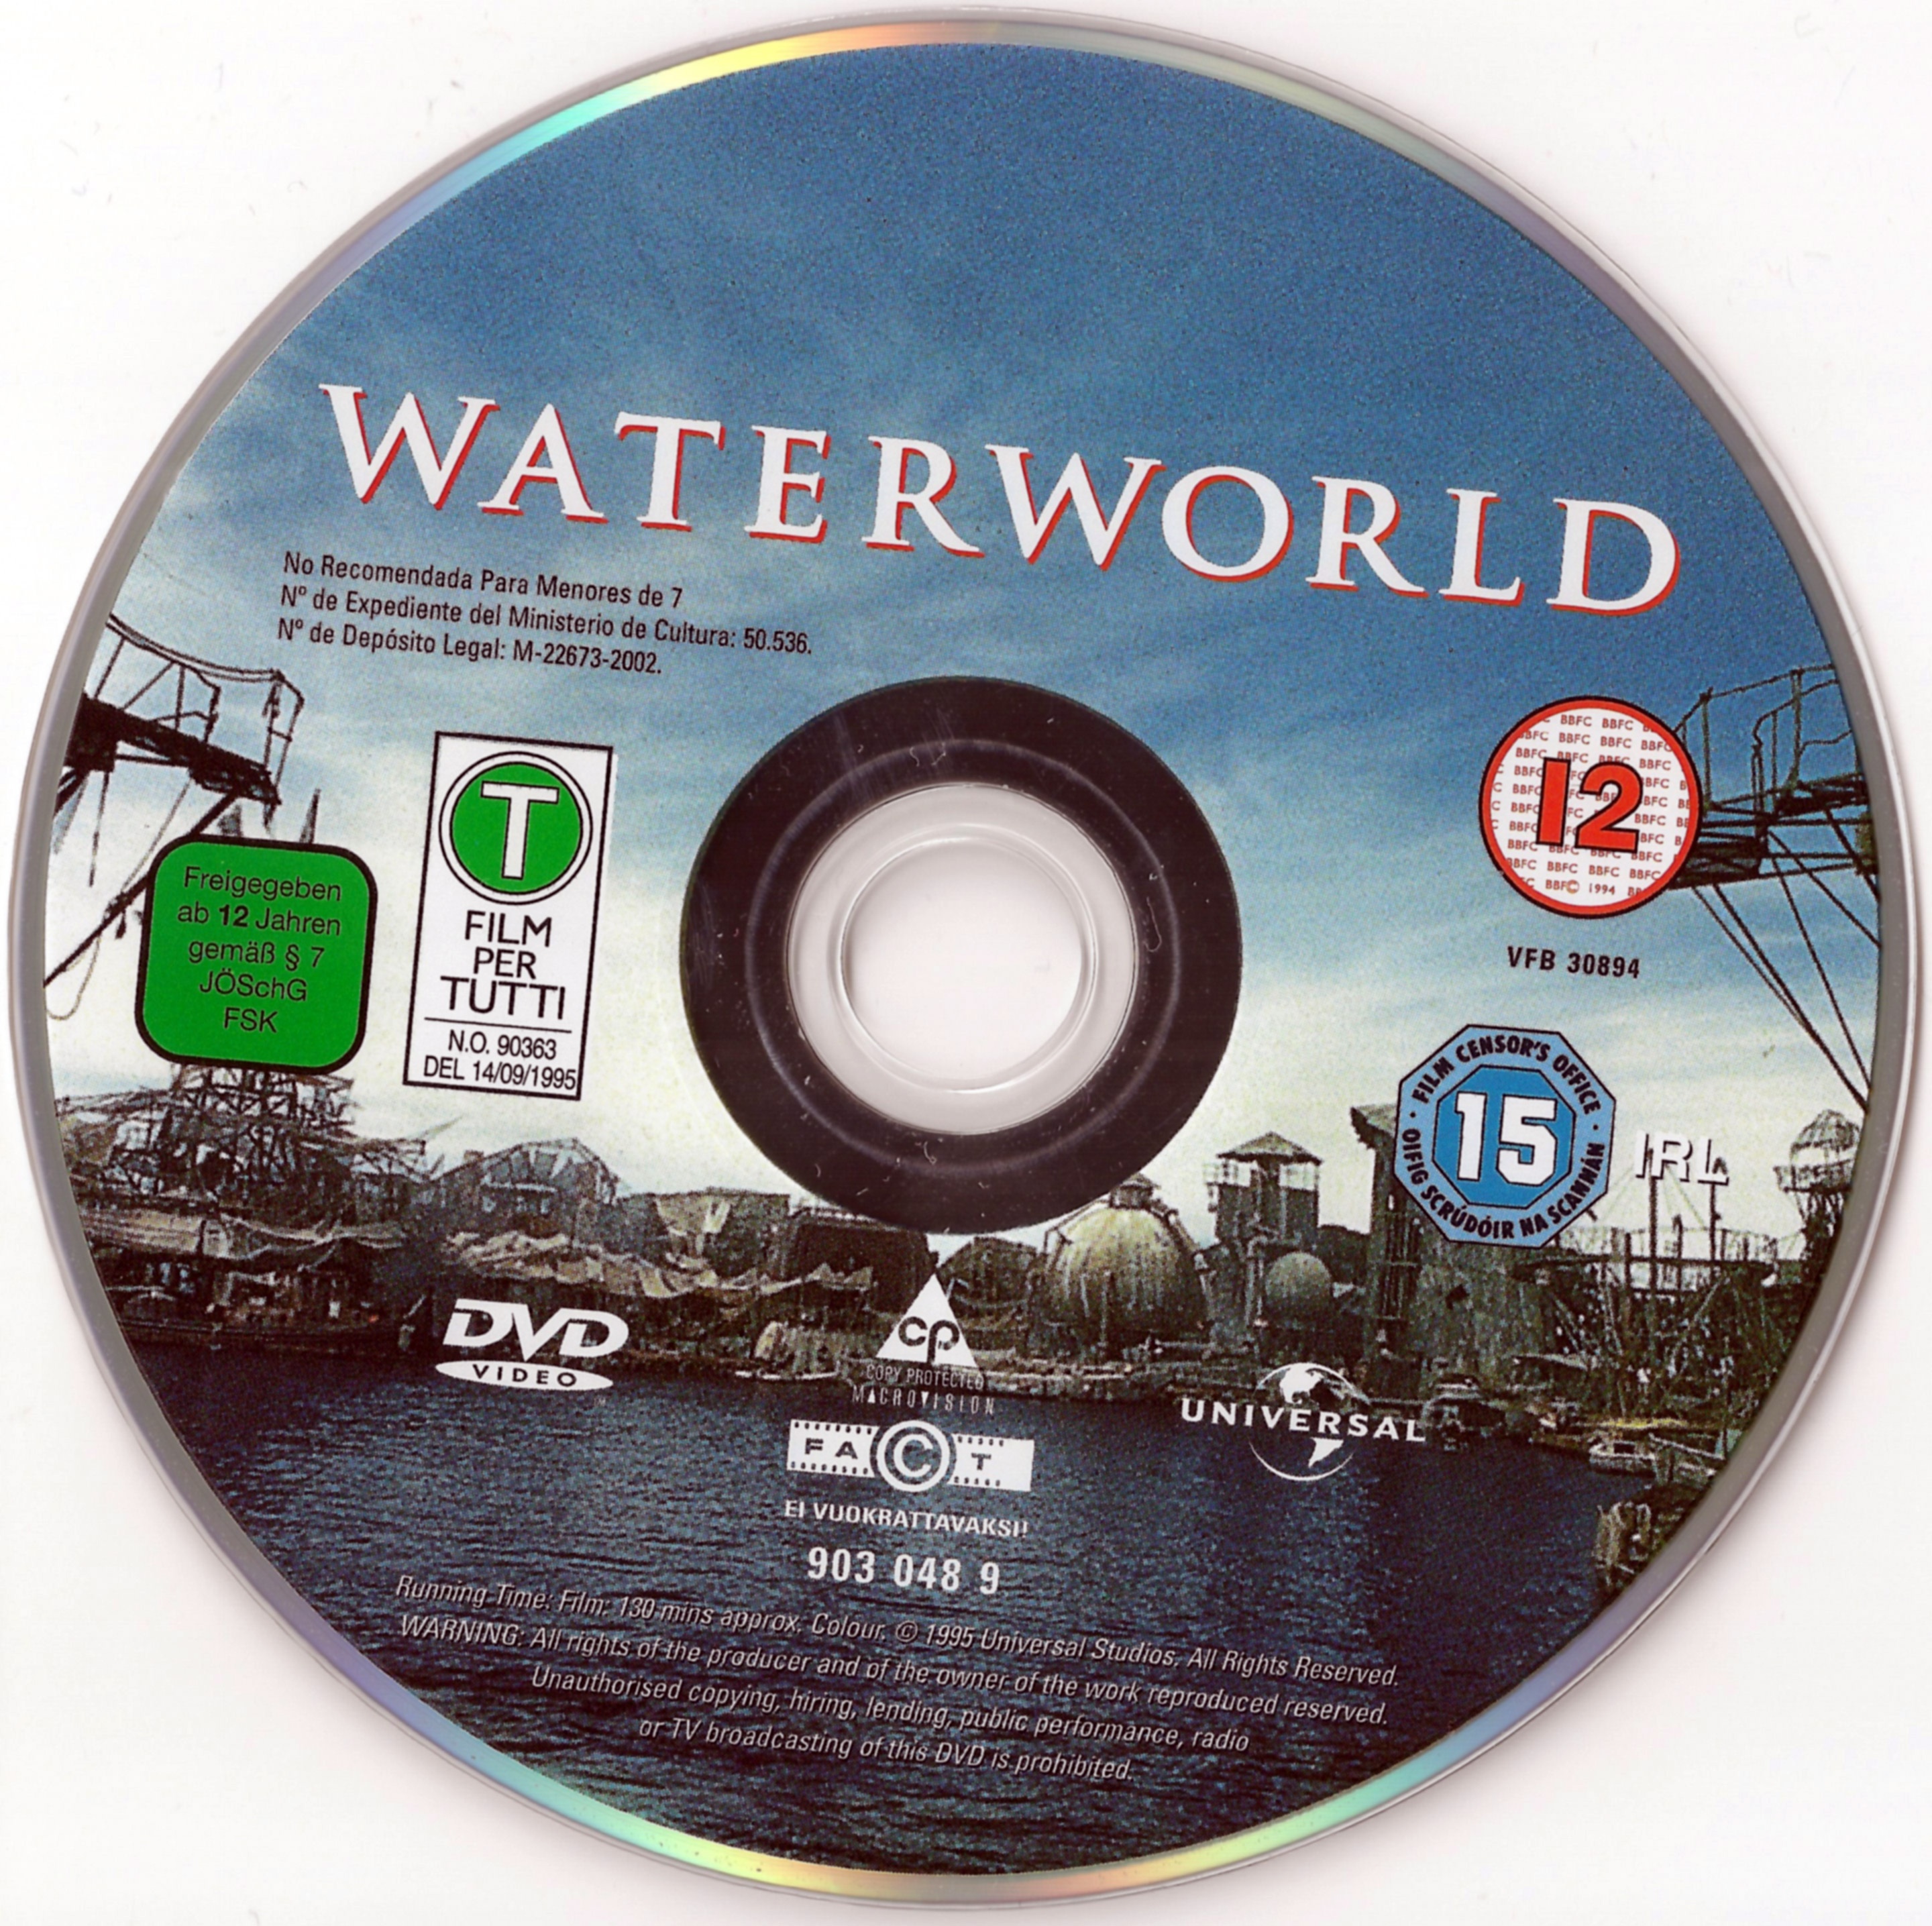 Waterworld v2